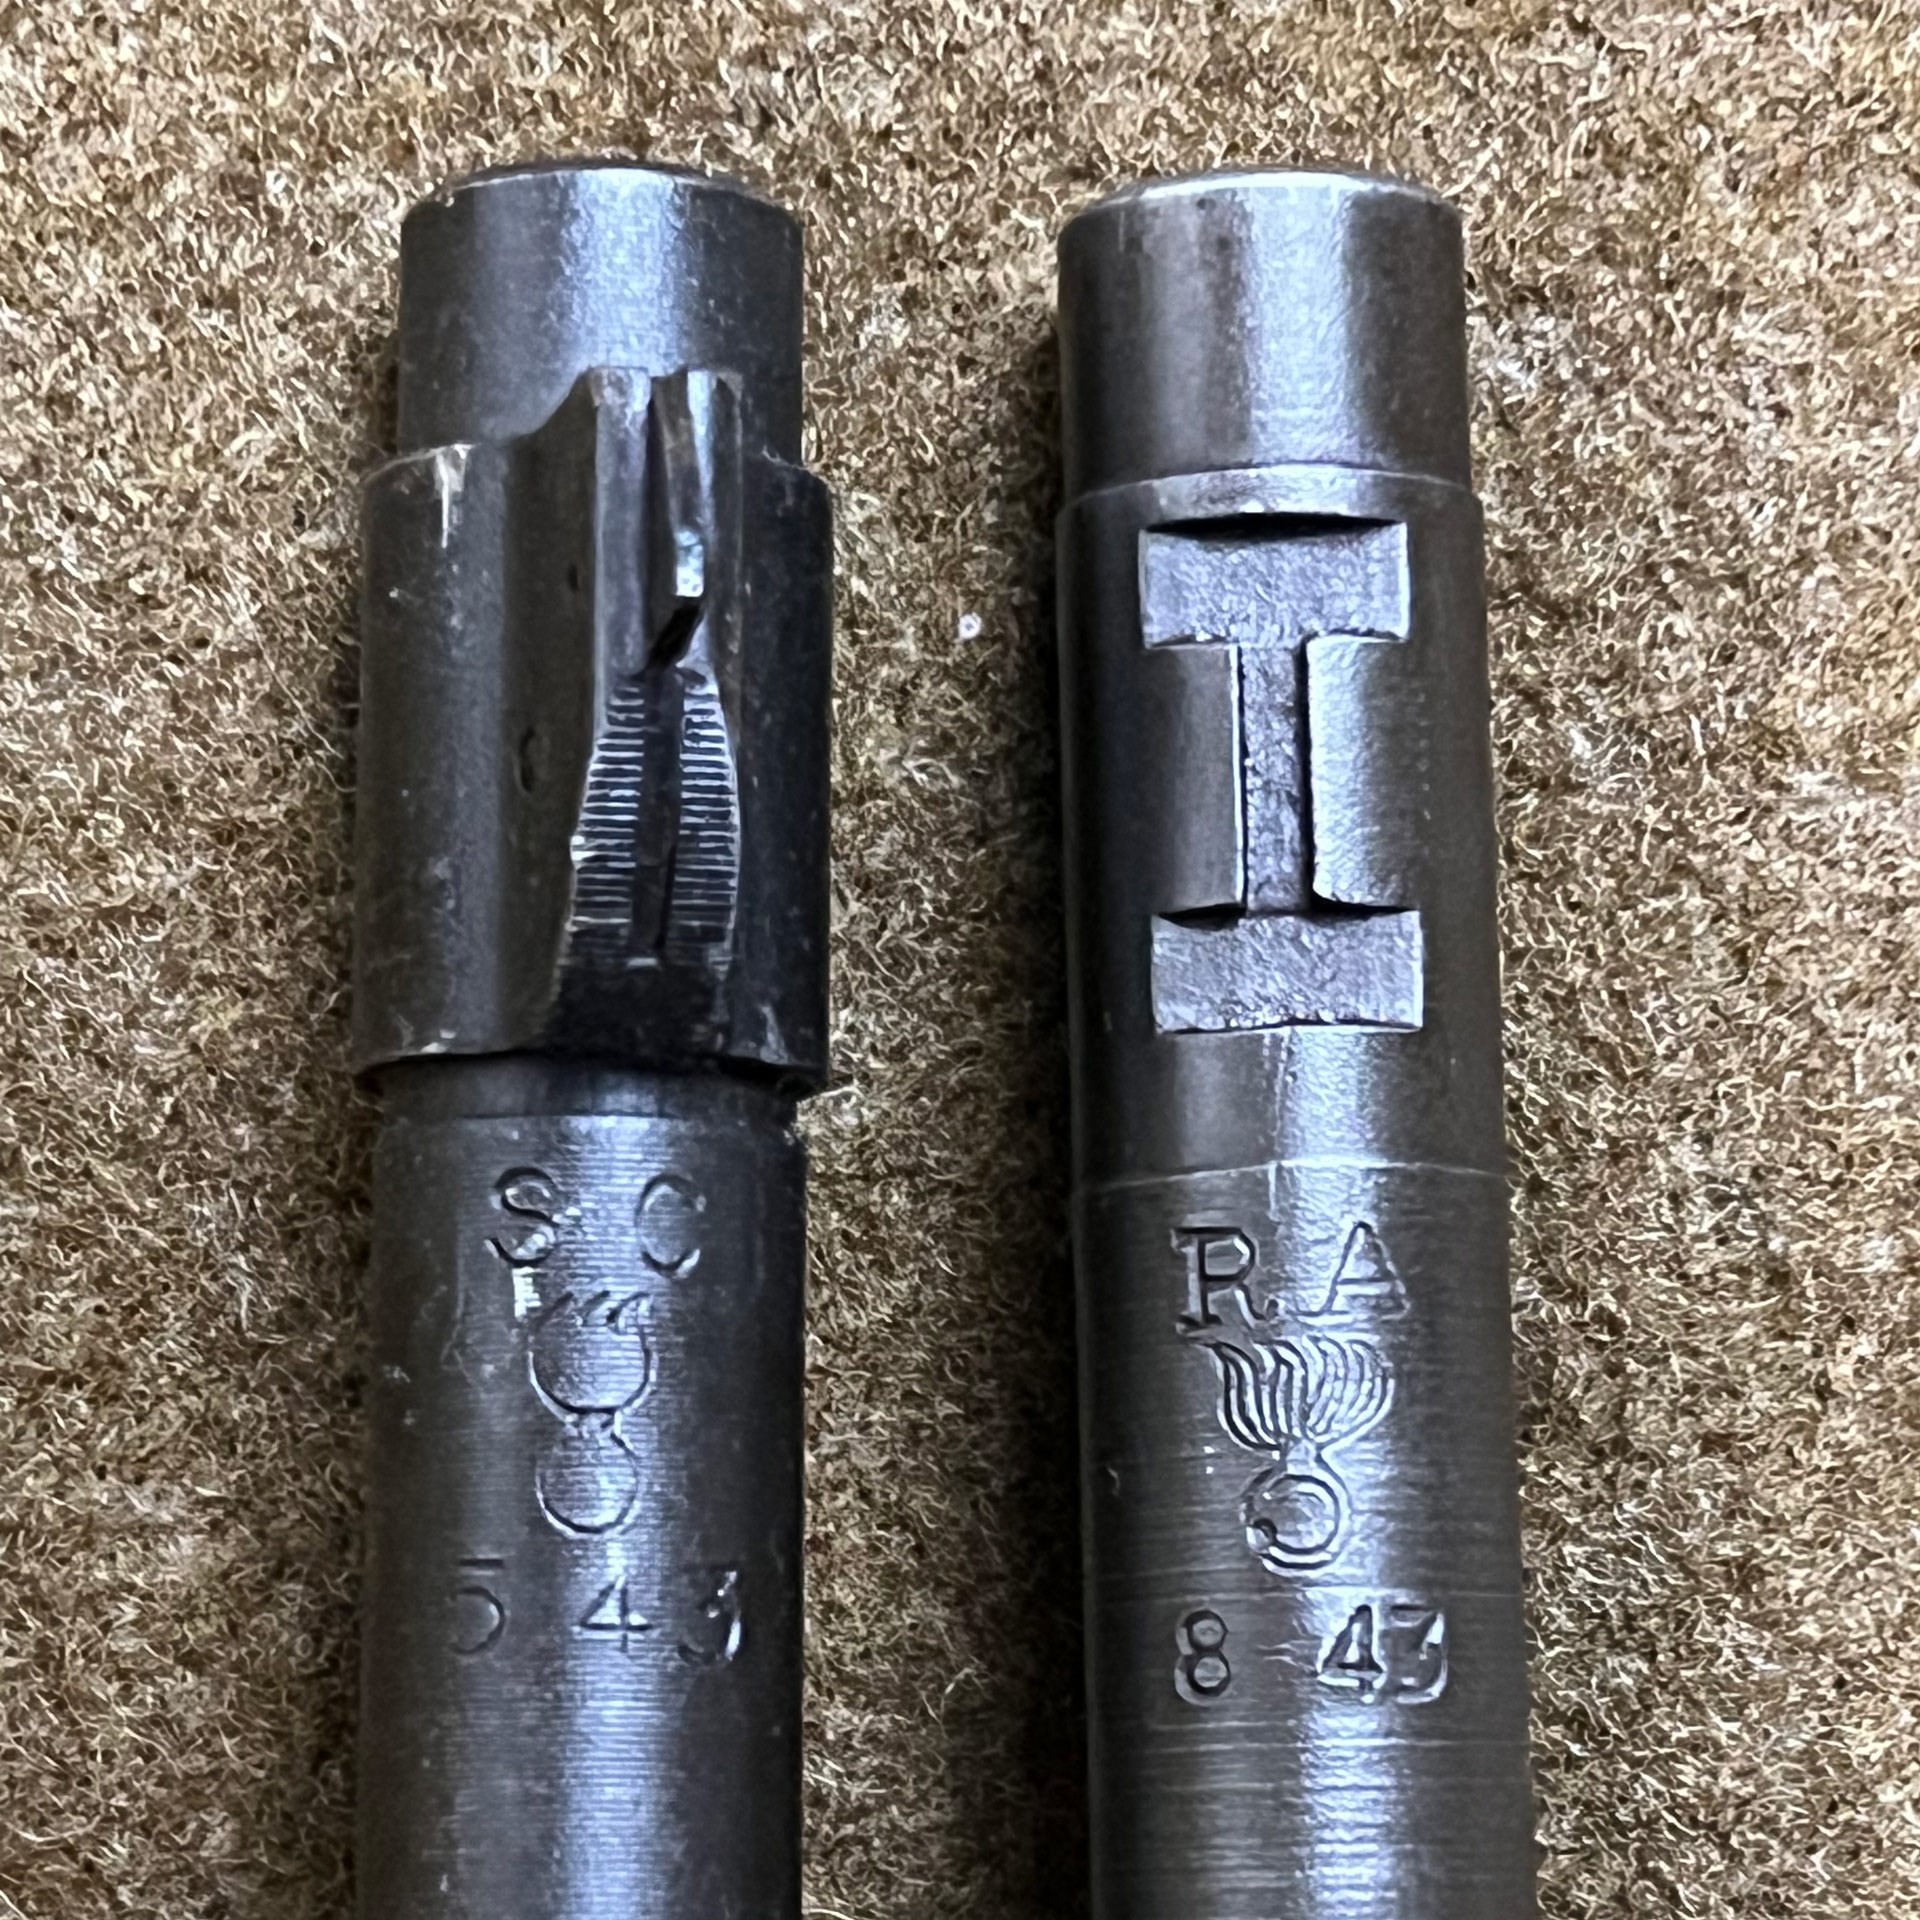 Comparison of M1903 military surplus rifle barrel sight muzzle stamping